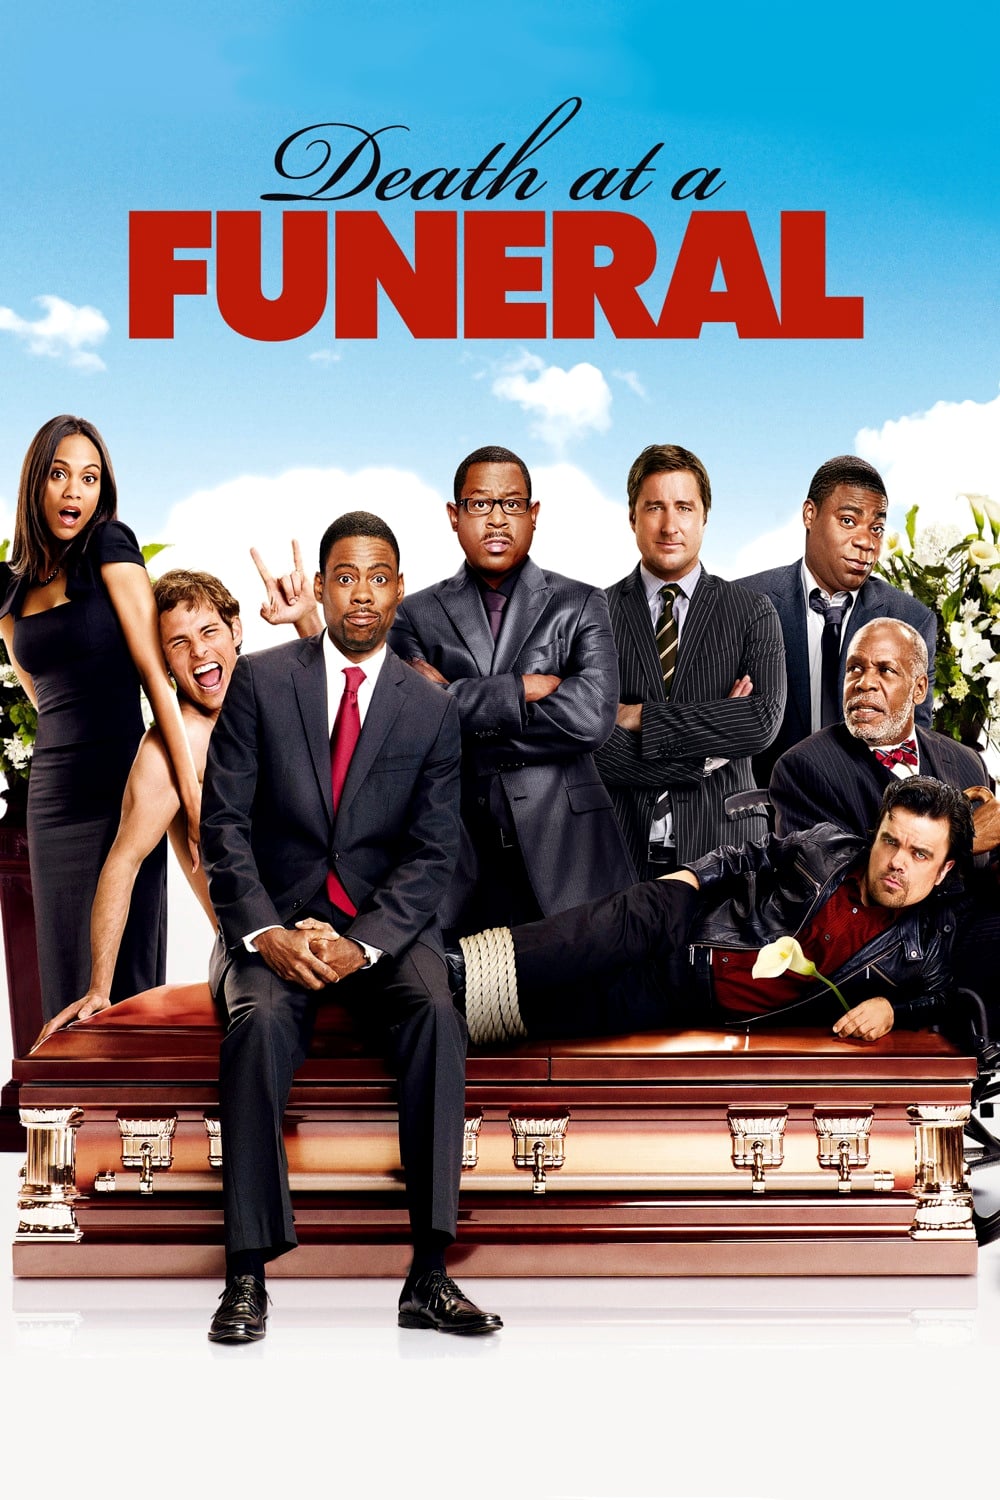 Morte no Funeral